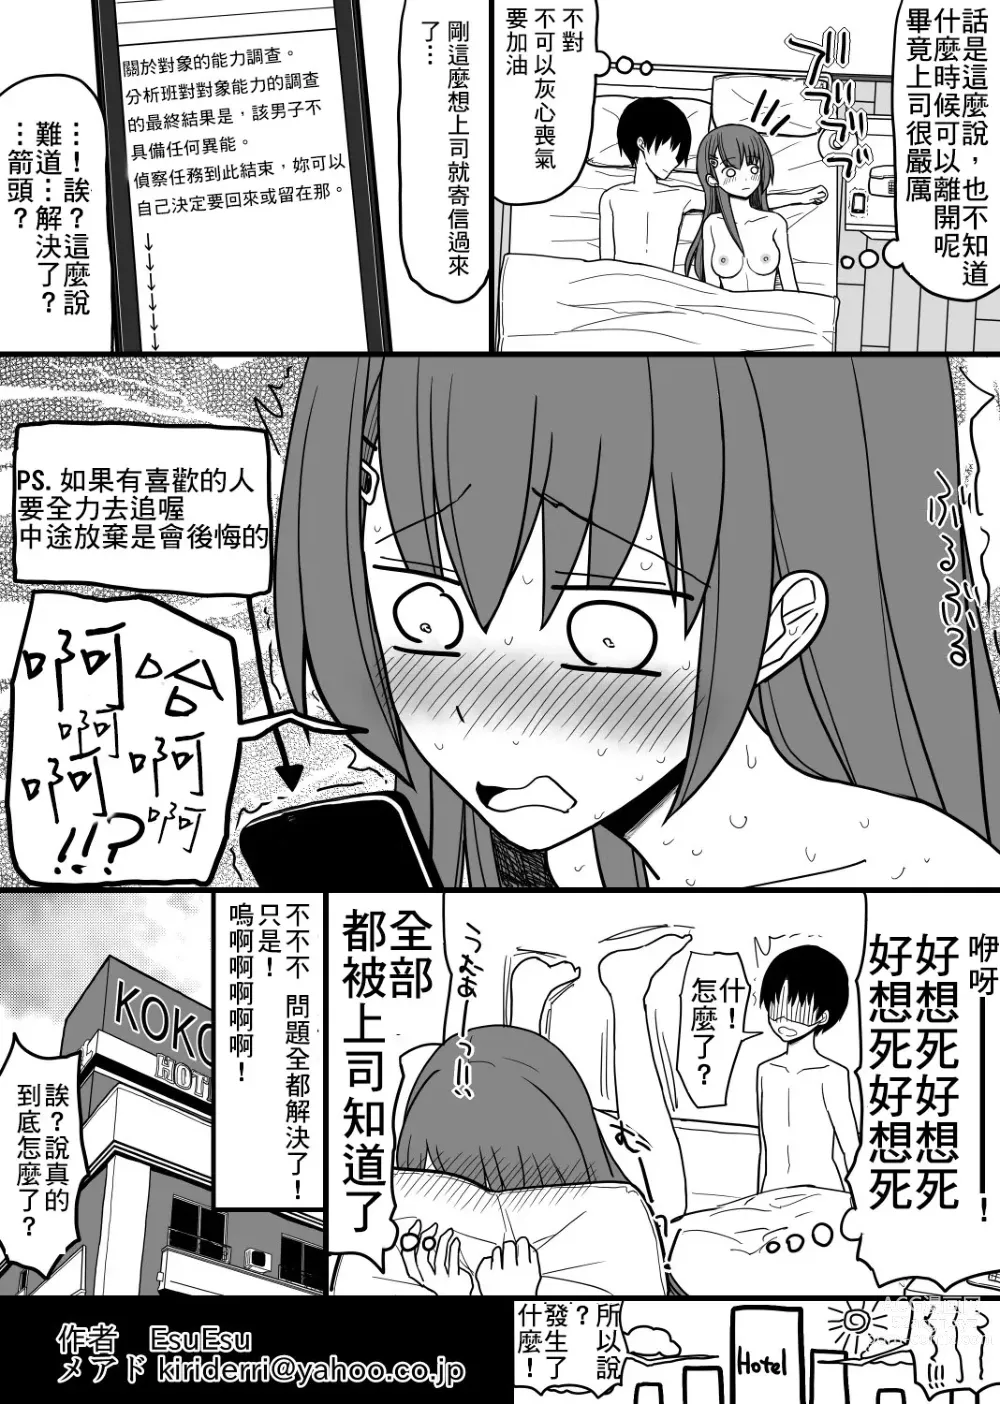 Page 24 of doujinshi 超能力を使える少年と監視員の少女